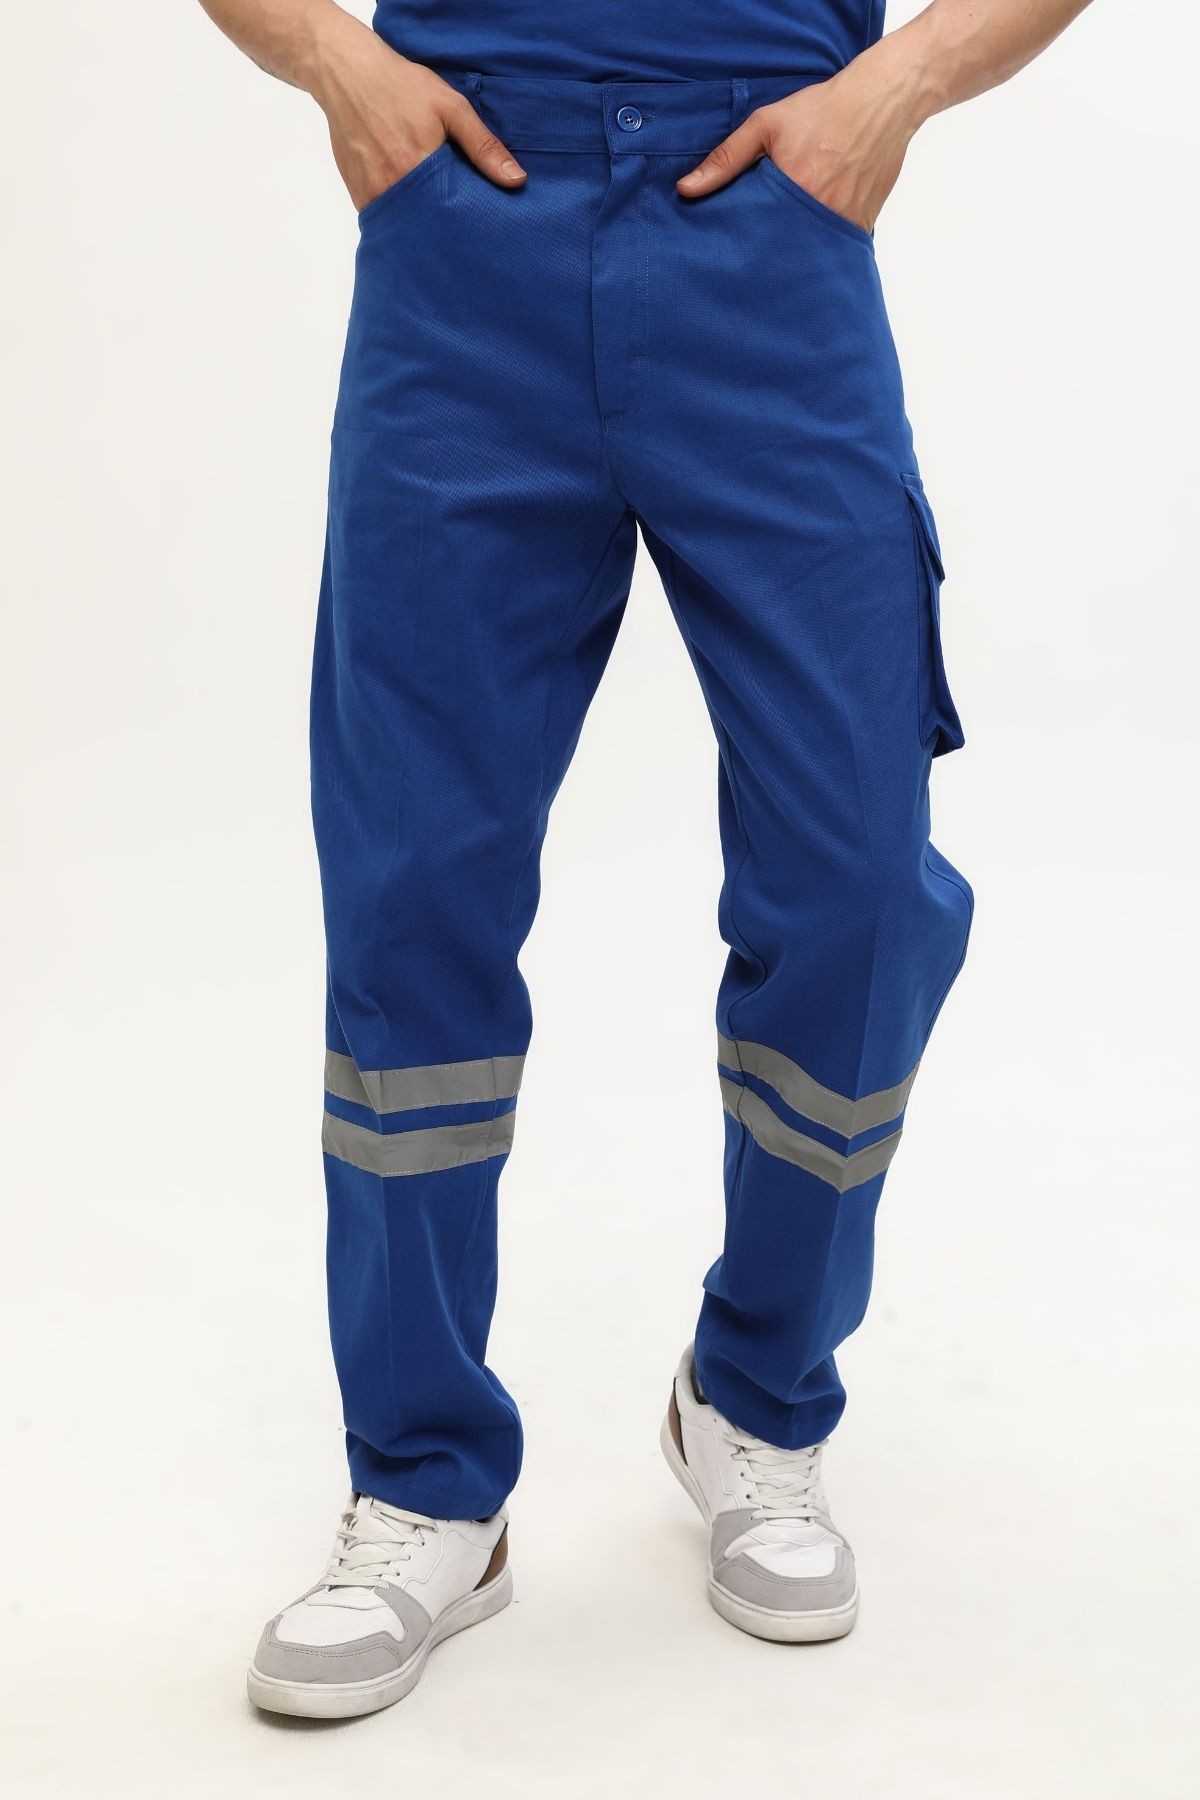 Uniprom İş Pantolonu %100 Pamuk Klasik Model Mavi Kargo Pantolon Yazlık